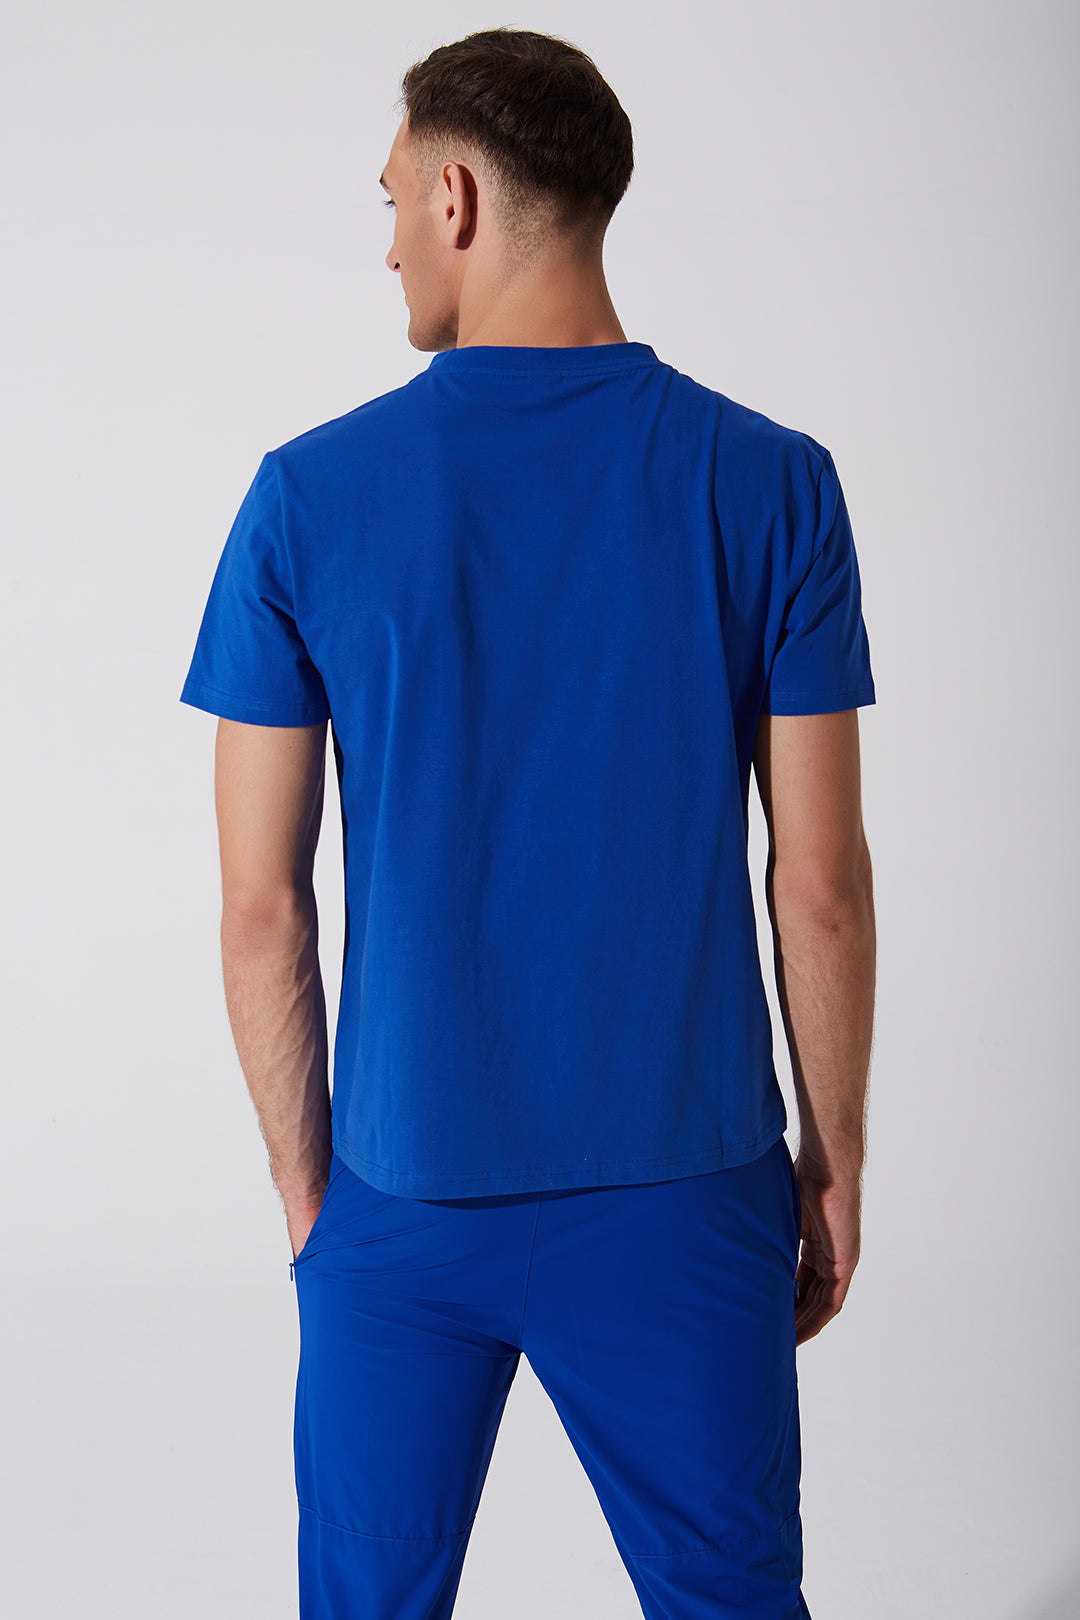 Unisex blue short sleeve tee for men, OW-0176-MSS-BL, showcasing the OLABEN logo - 4th variant.